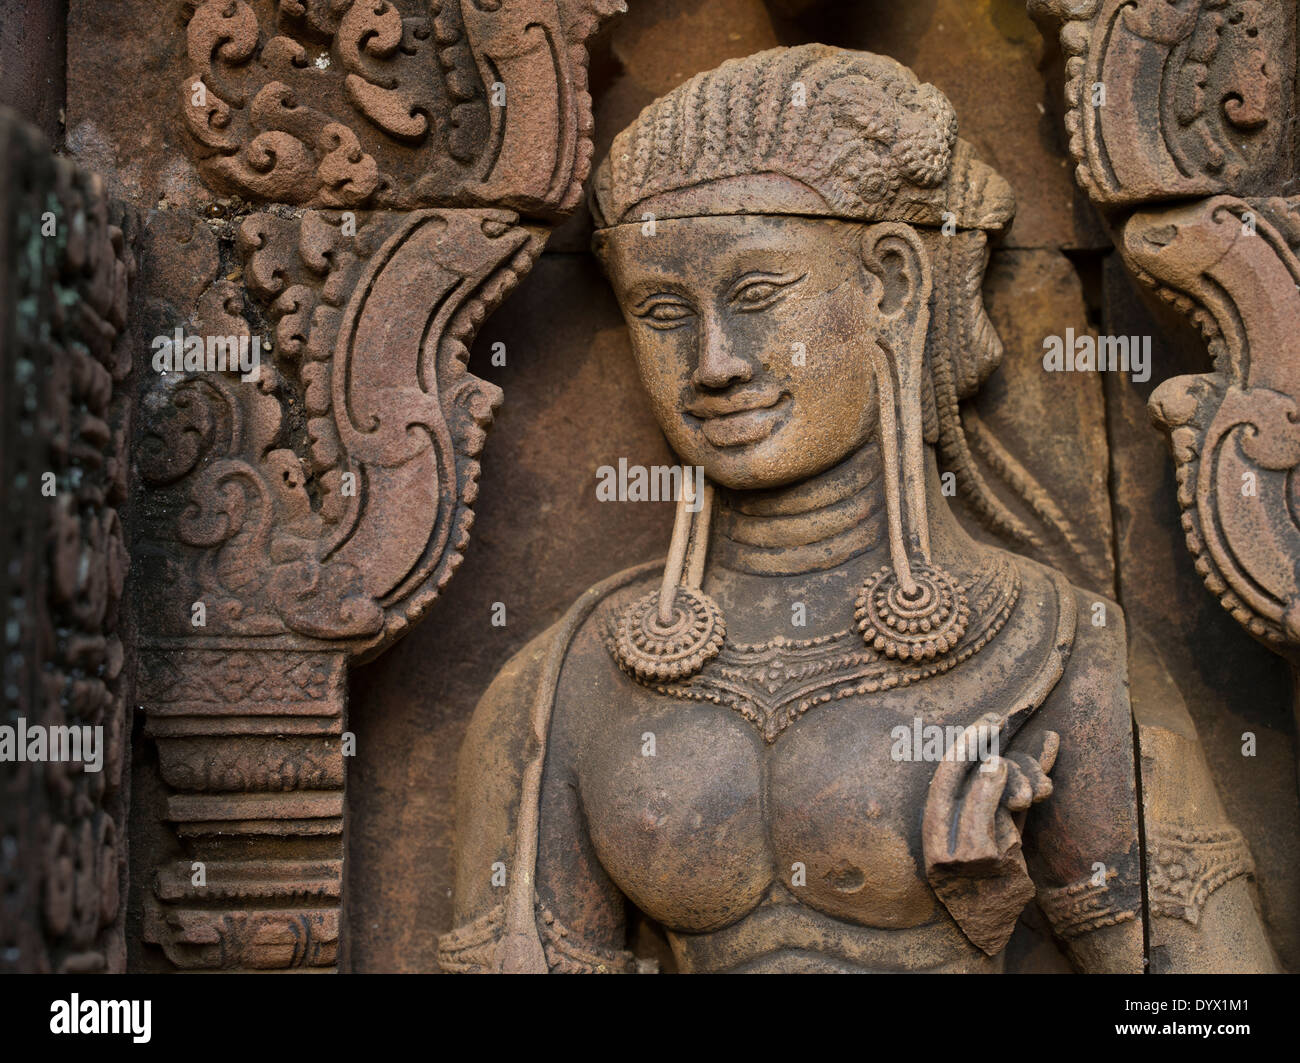 Apsara Carving am Banteay Srei Hindu Tempel, der Shiva gewidmet. Siem Reap, Kambodscha Stockfoto